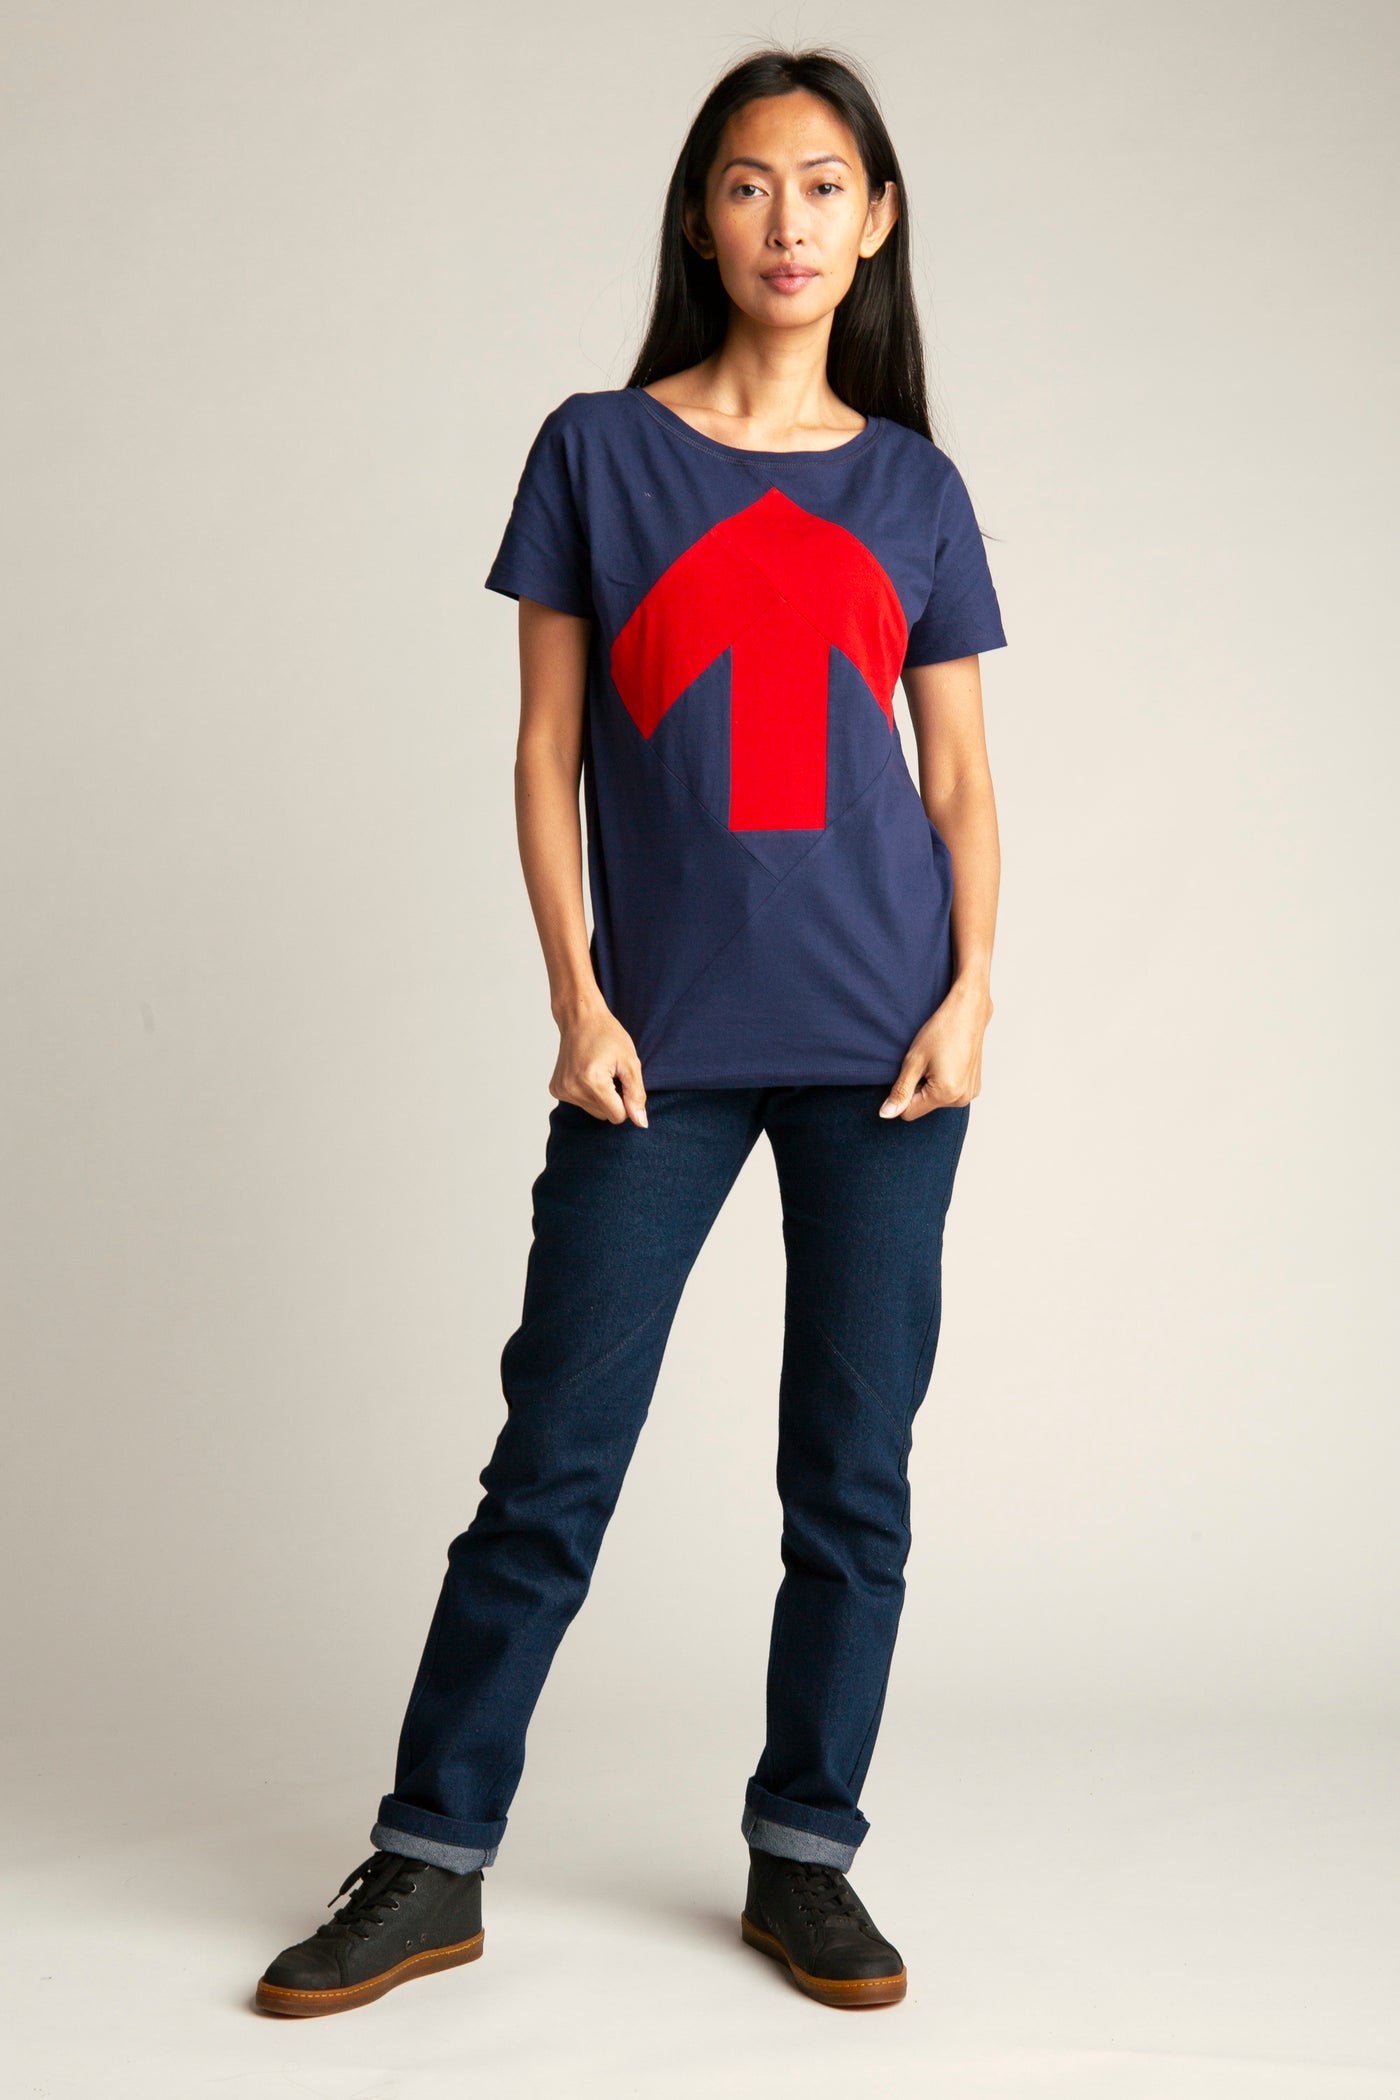 Up-Shirt für Damen | Dunkelblau, rot